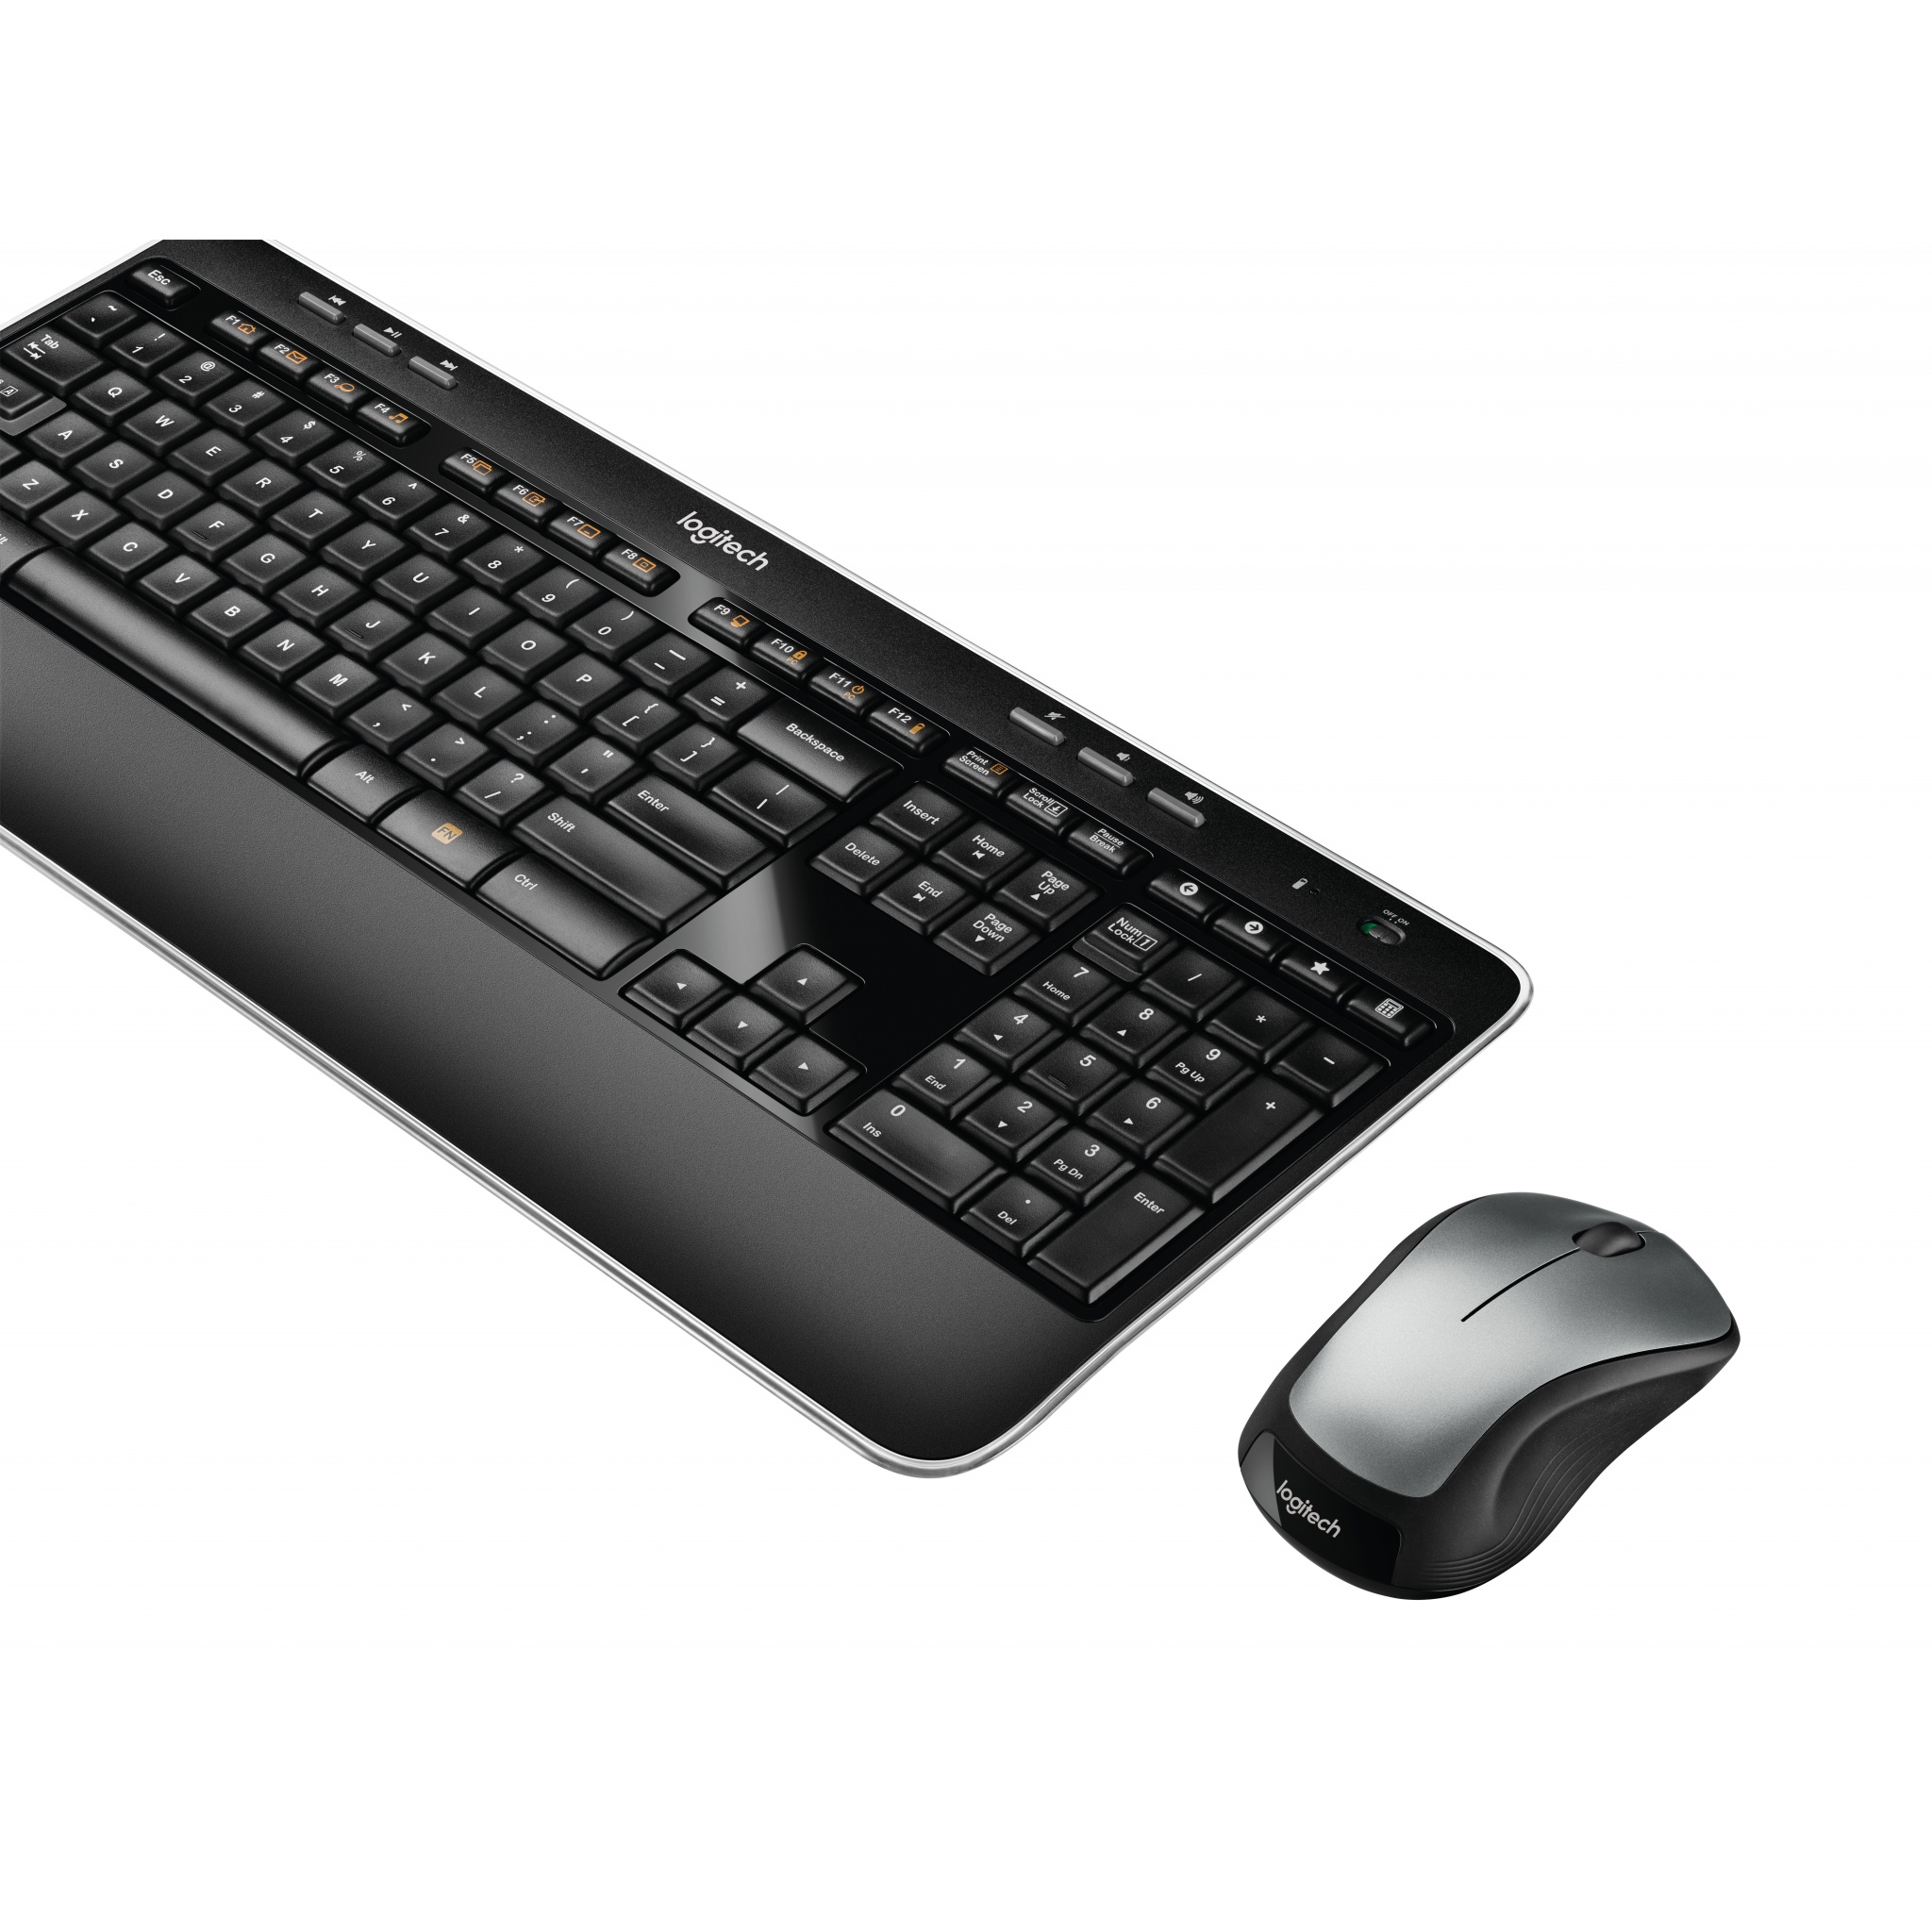 Blueprint indsats Give Logitech Wireless MK250 Keyboard + Mouse Combo - Spanish Layout QWERTY